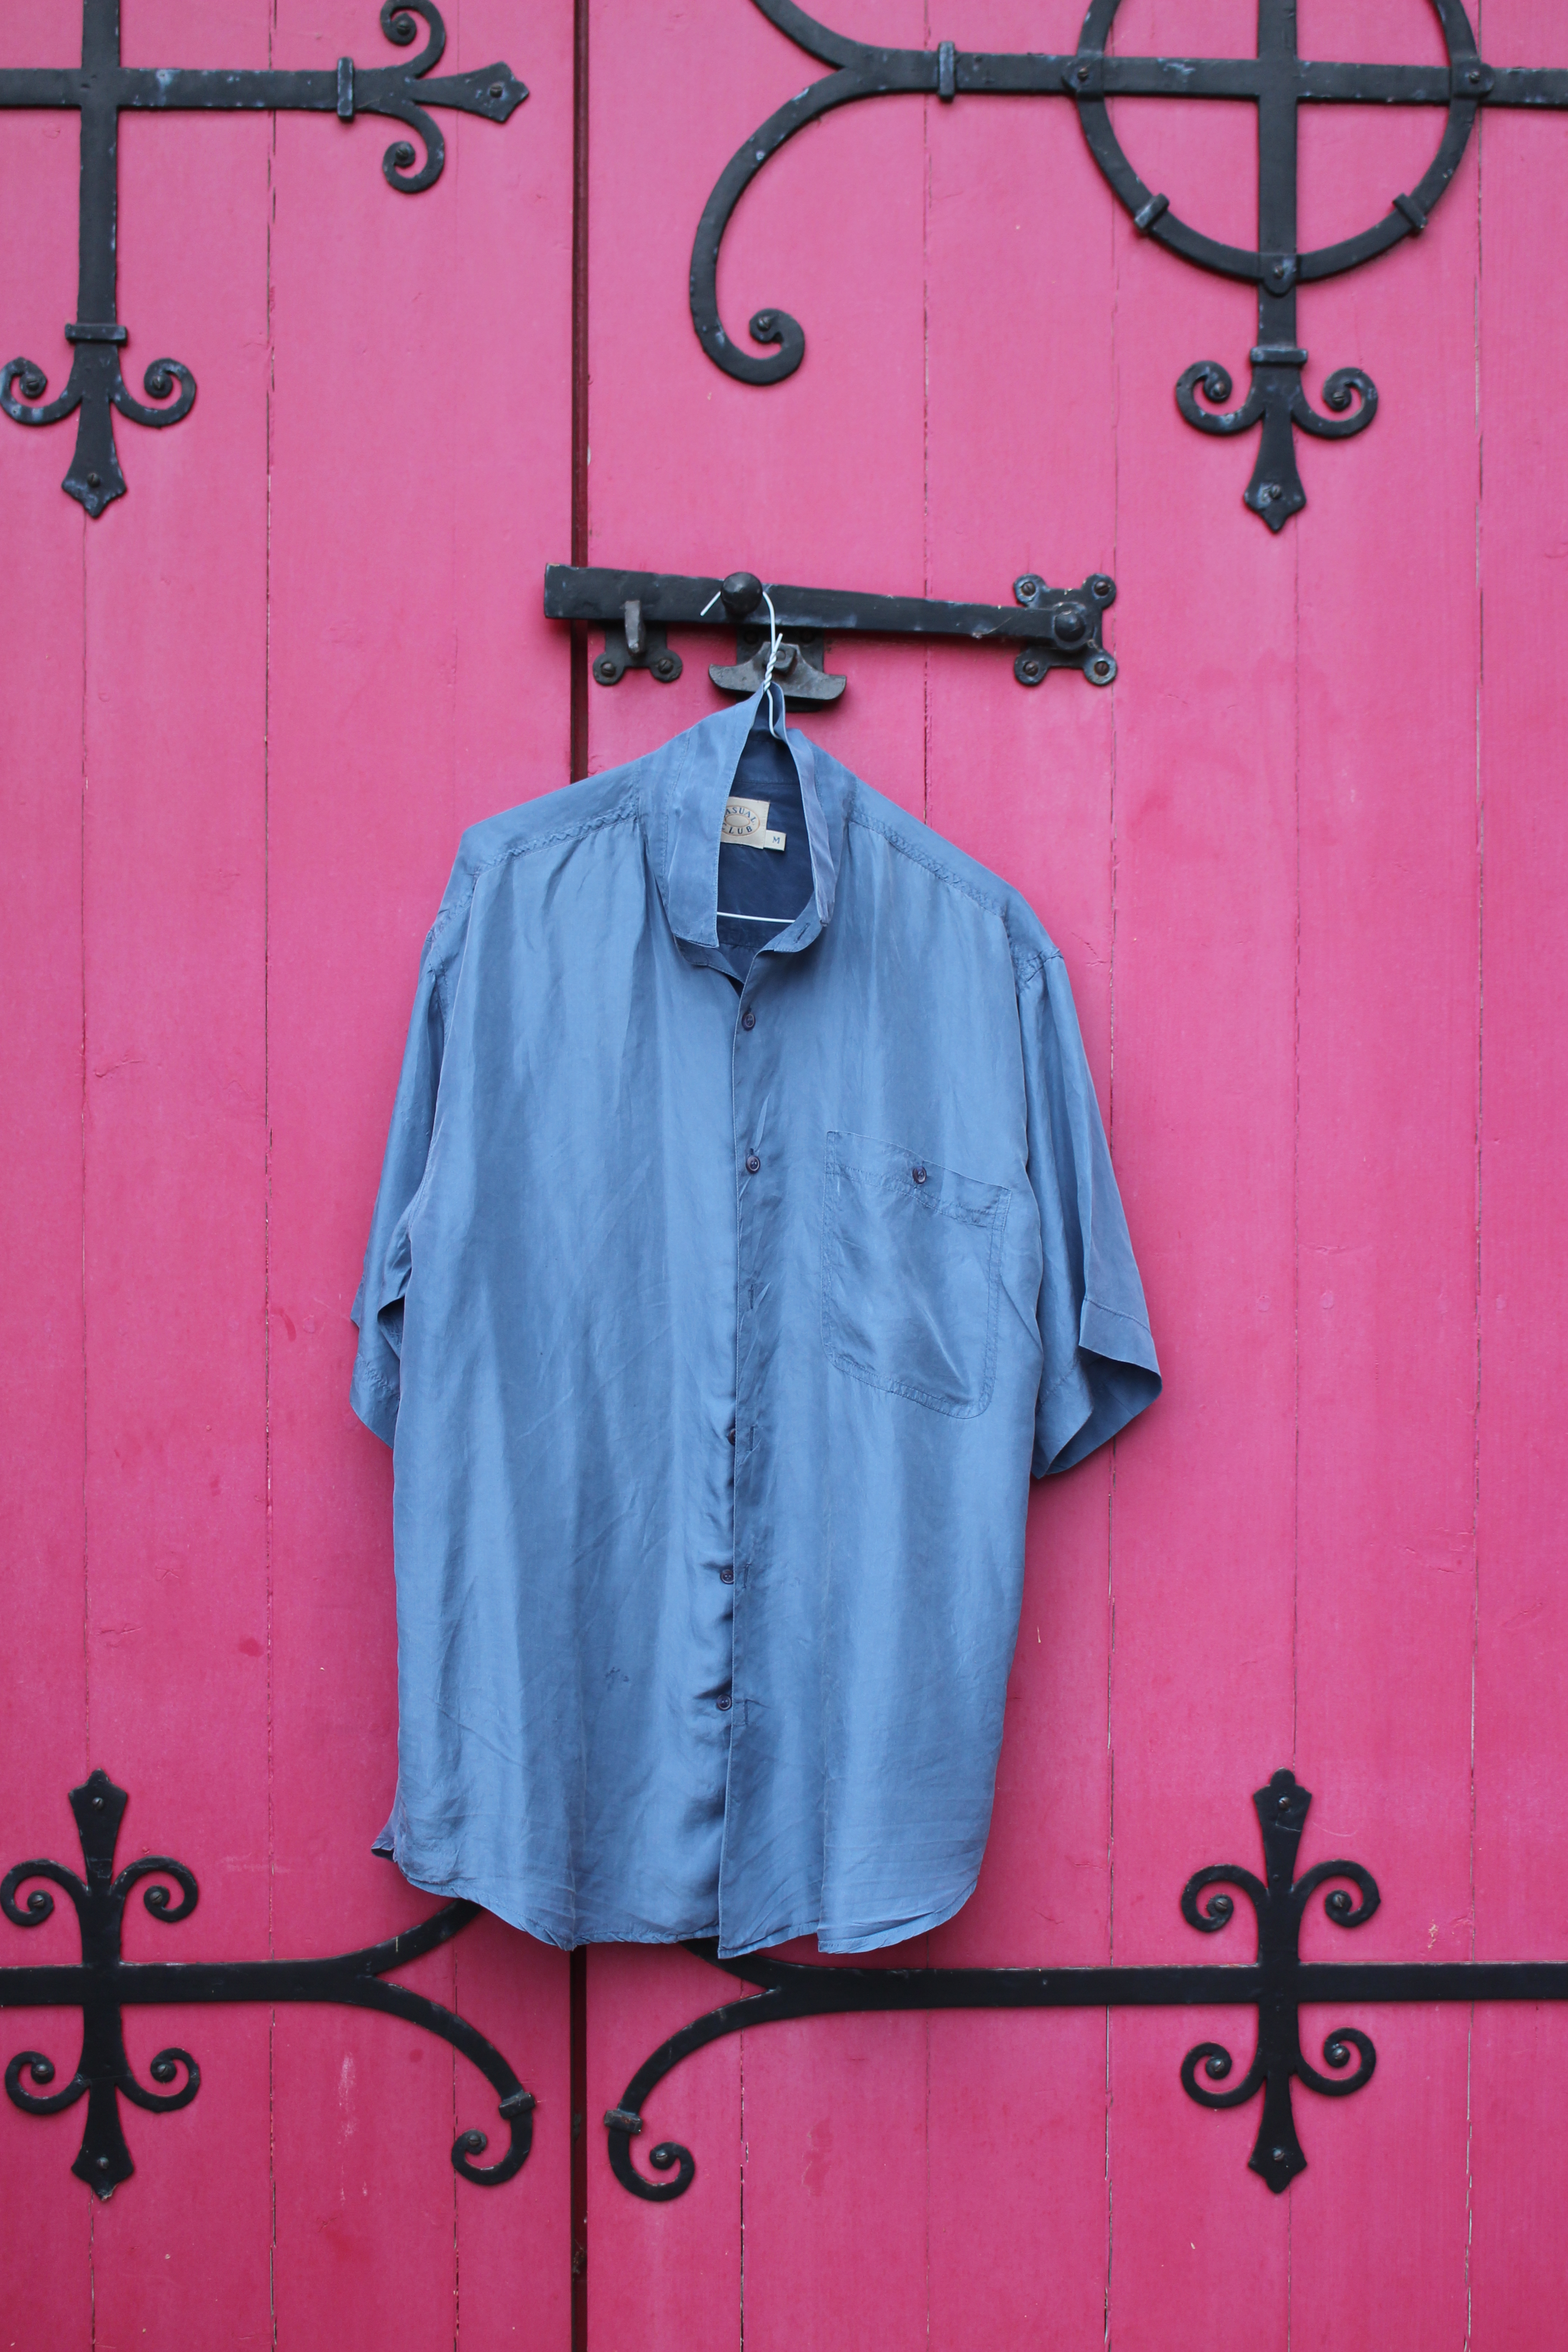 Casual Club grey short-sleeved silk shirt, from Unicorn, 5 Ship Street, Oxford